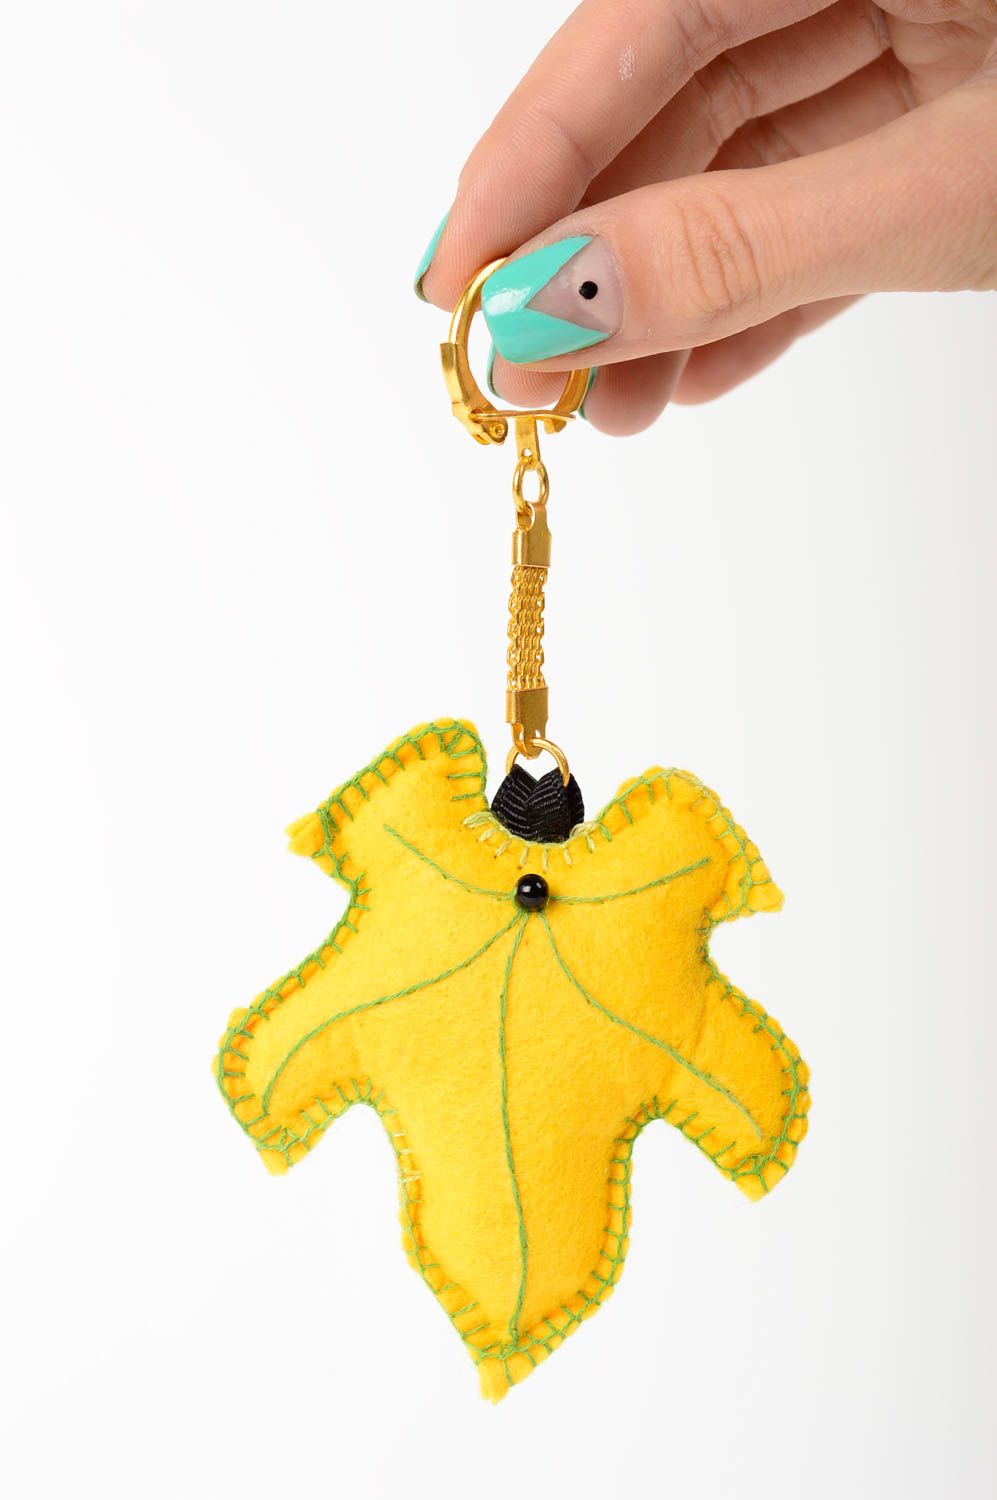 Textil Schlüsselanhänger Blatt in Gelb originell grell handmade aus Filz foto 4